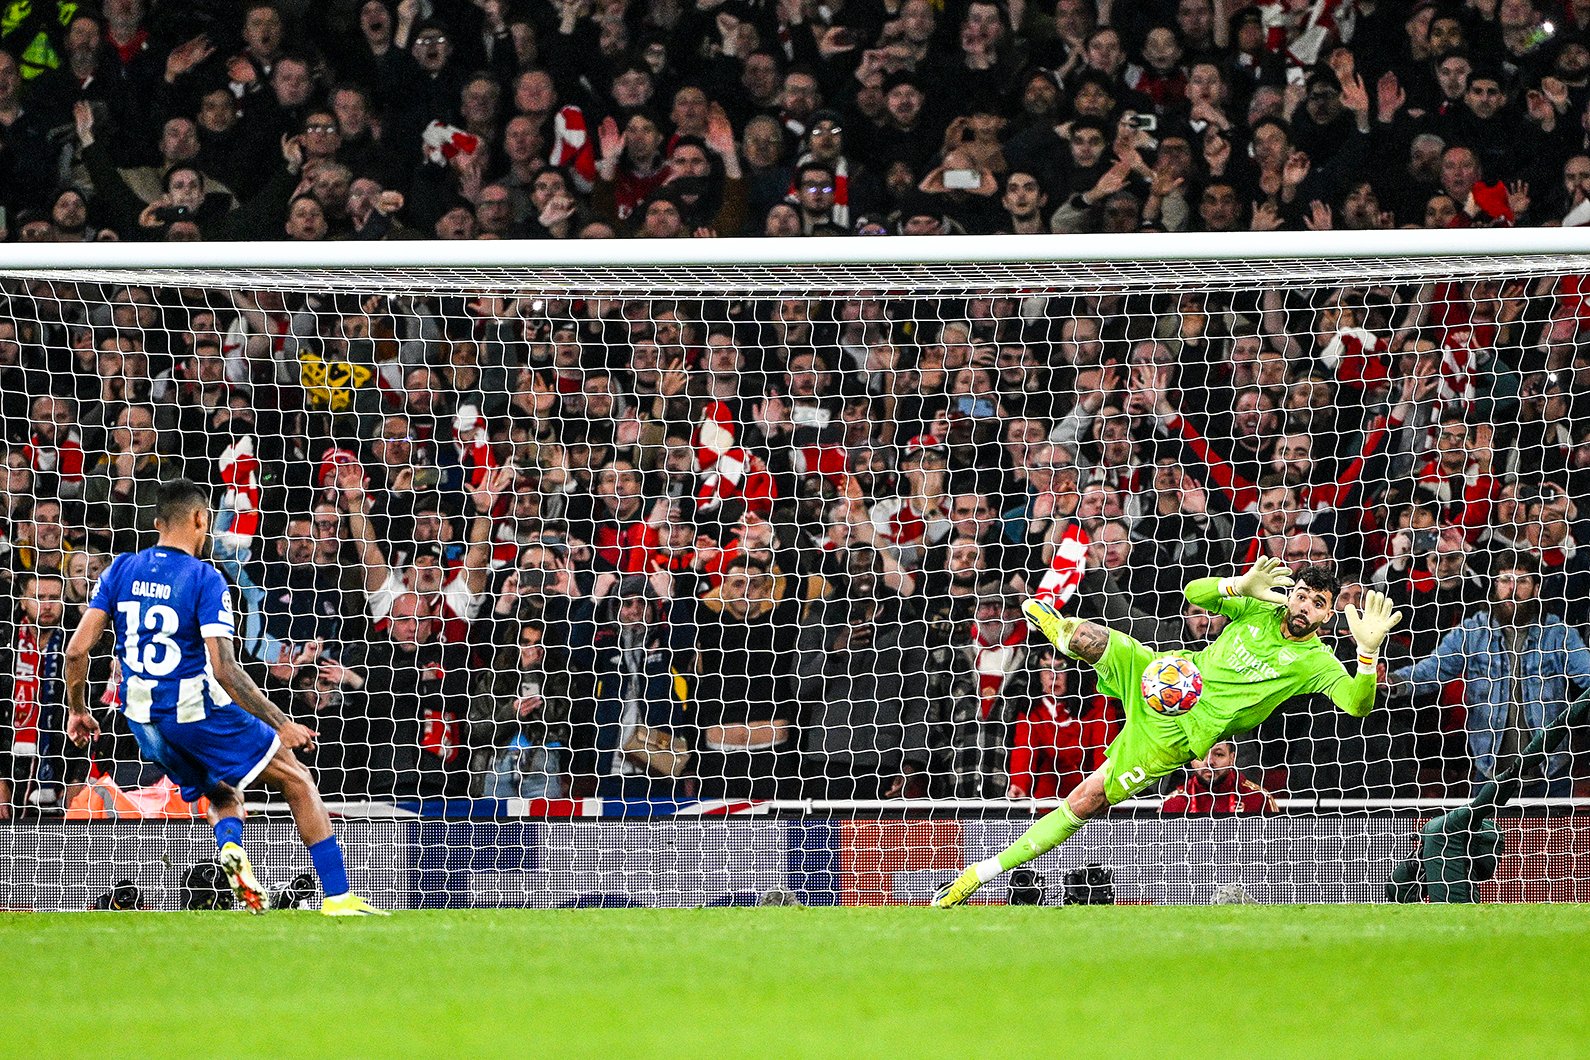 Raya brilha pelo Arsenal nas oitavas de final da Champions League